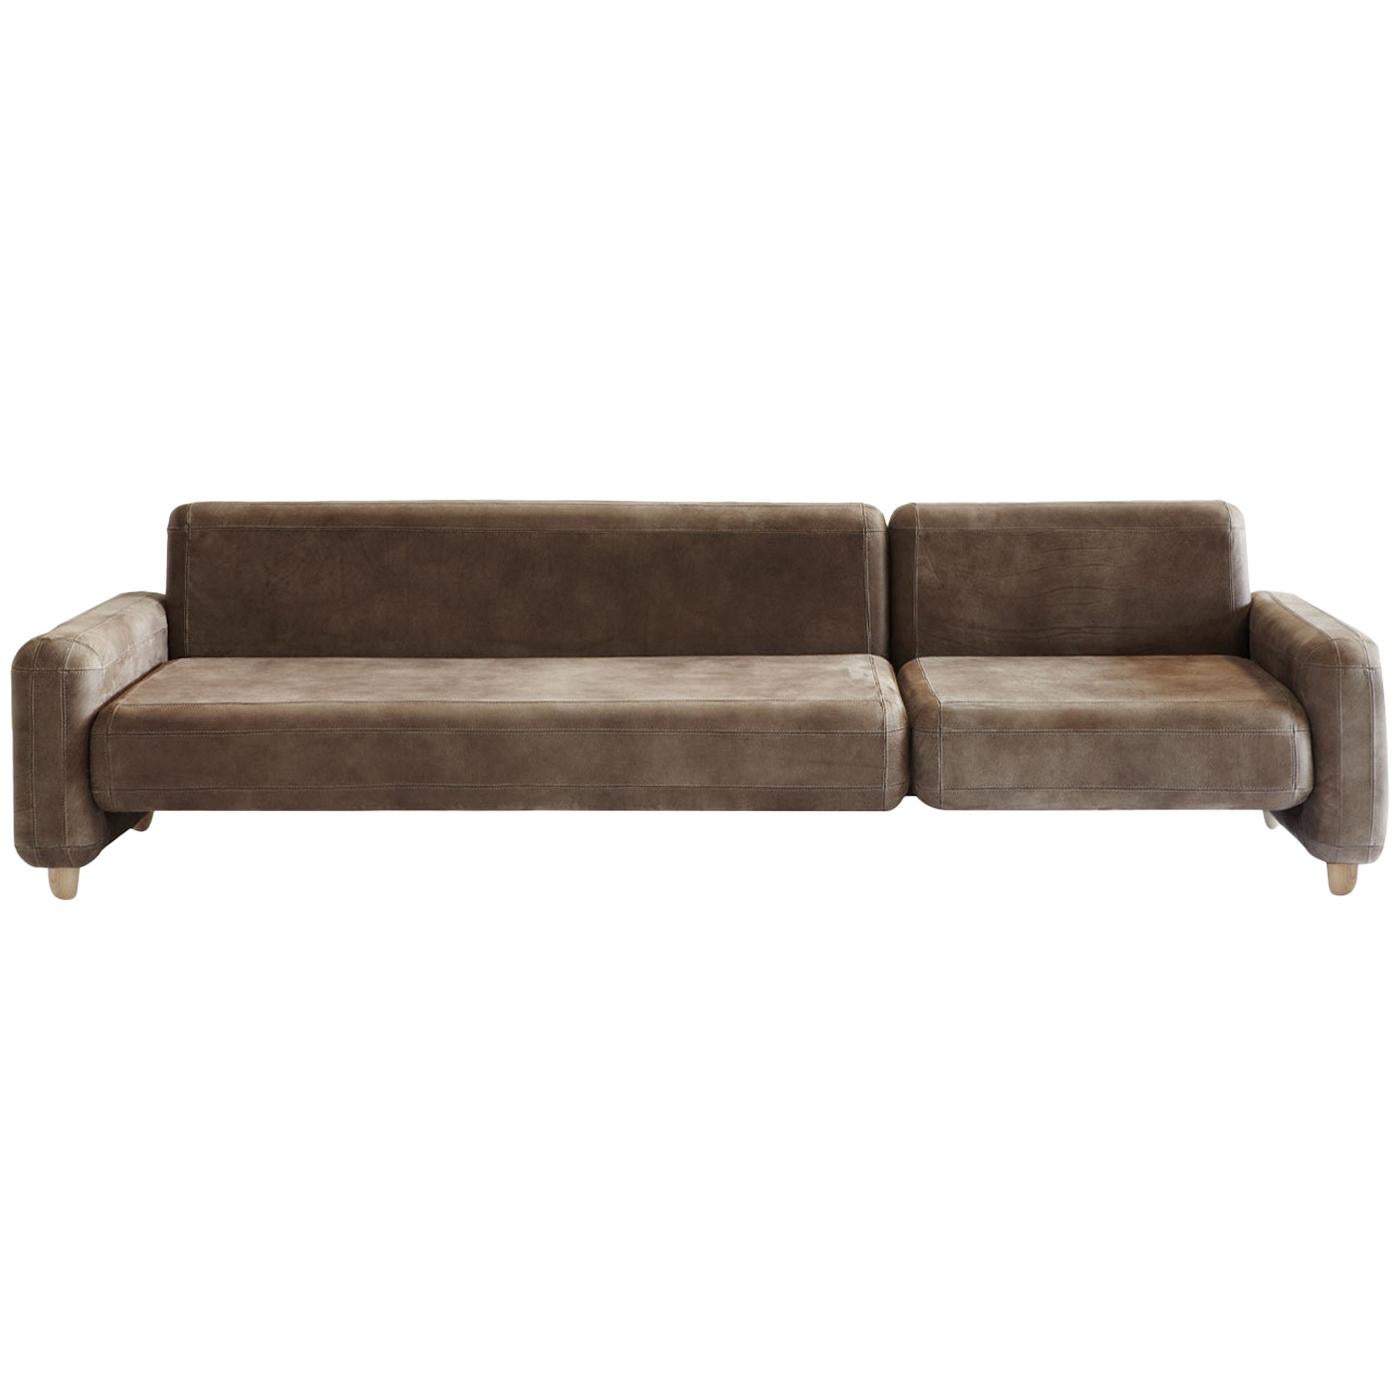 Traco Gray Leather Sofa by Paolo Capello For Sale